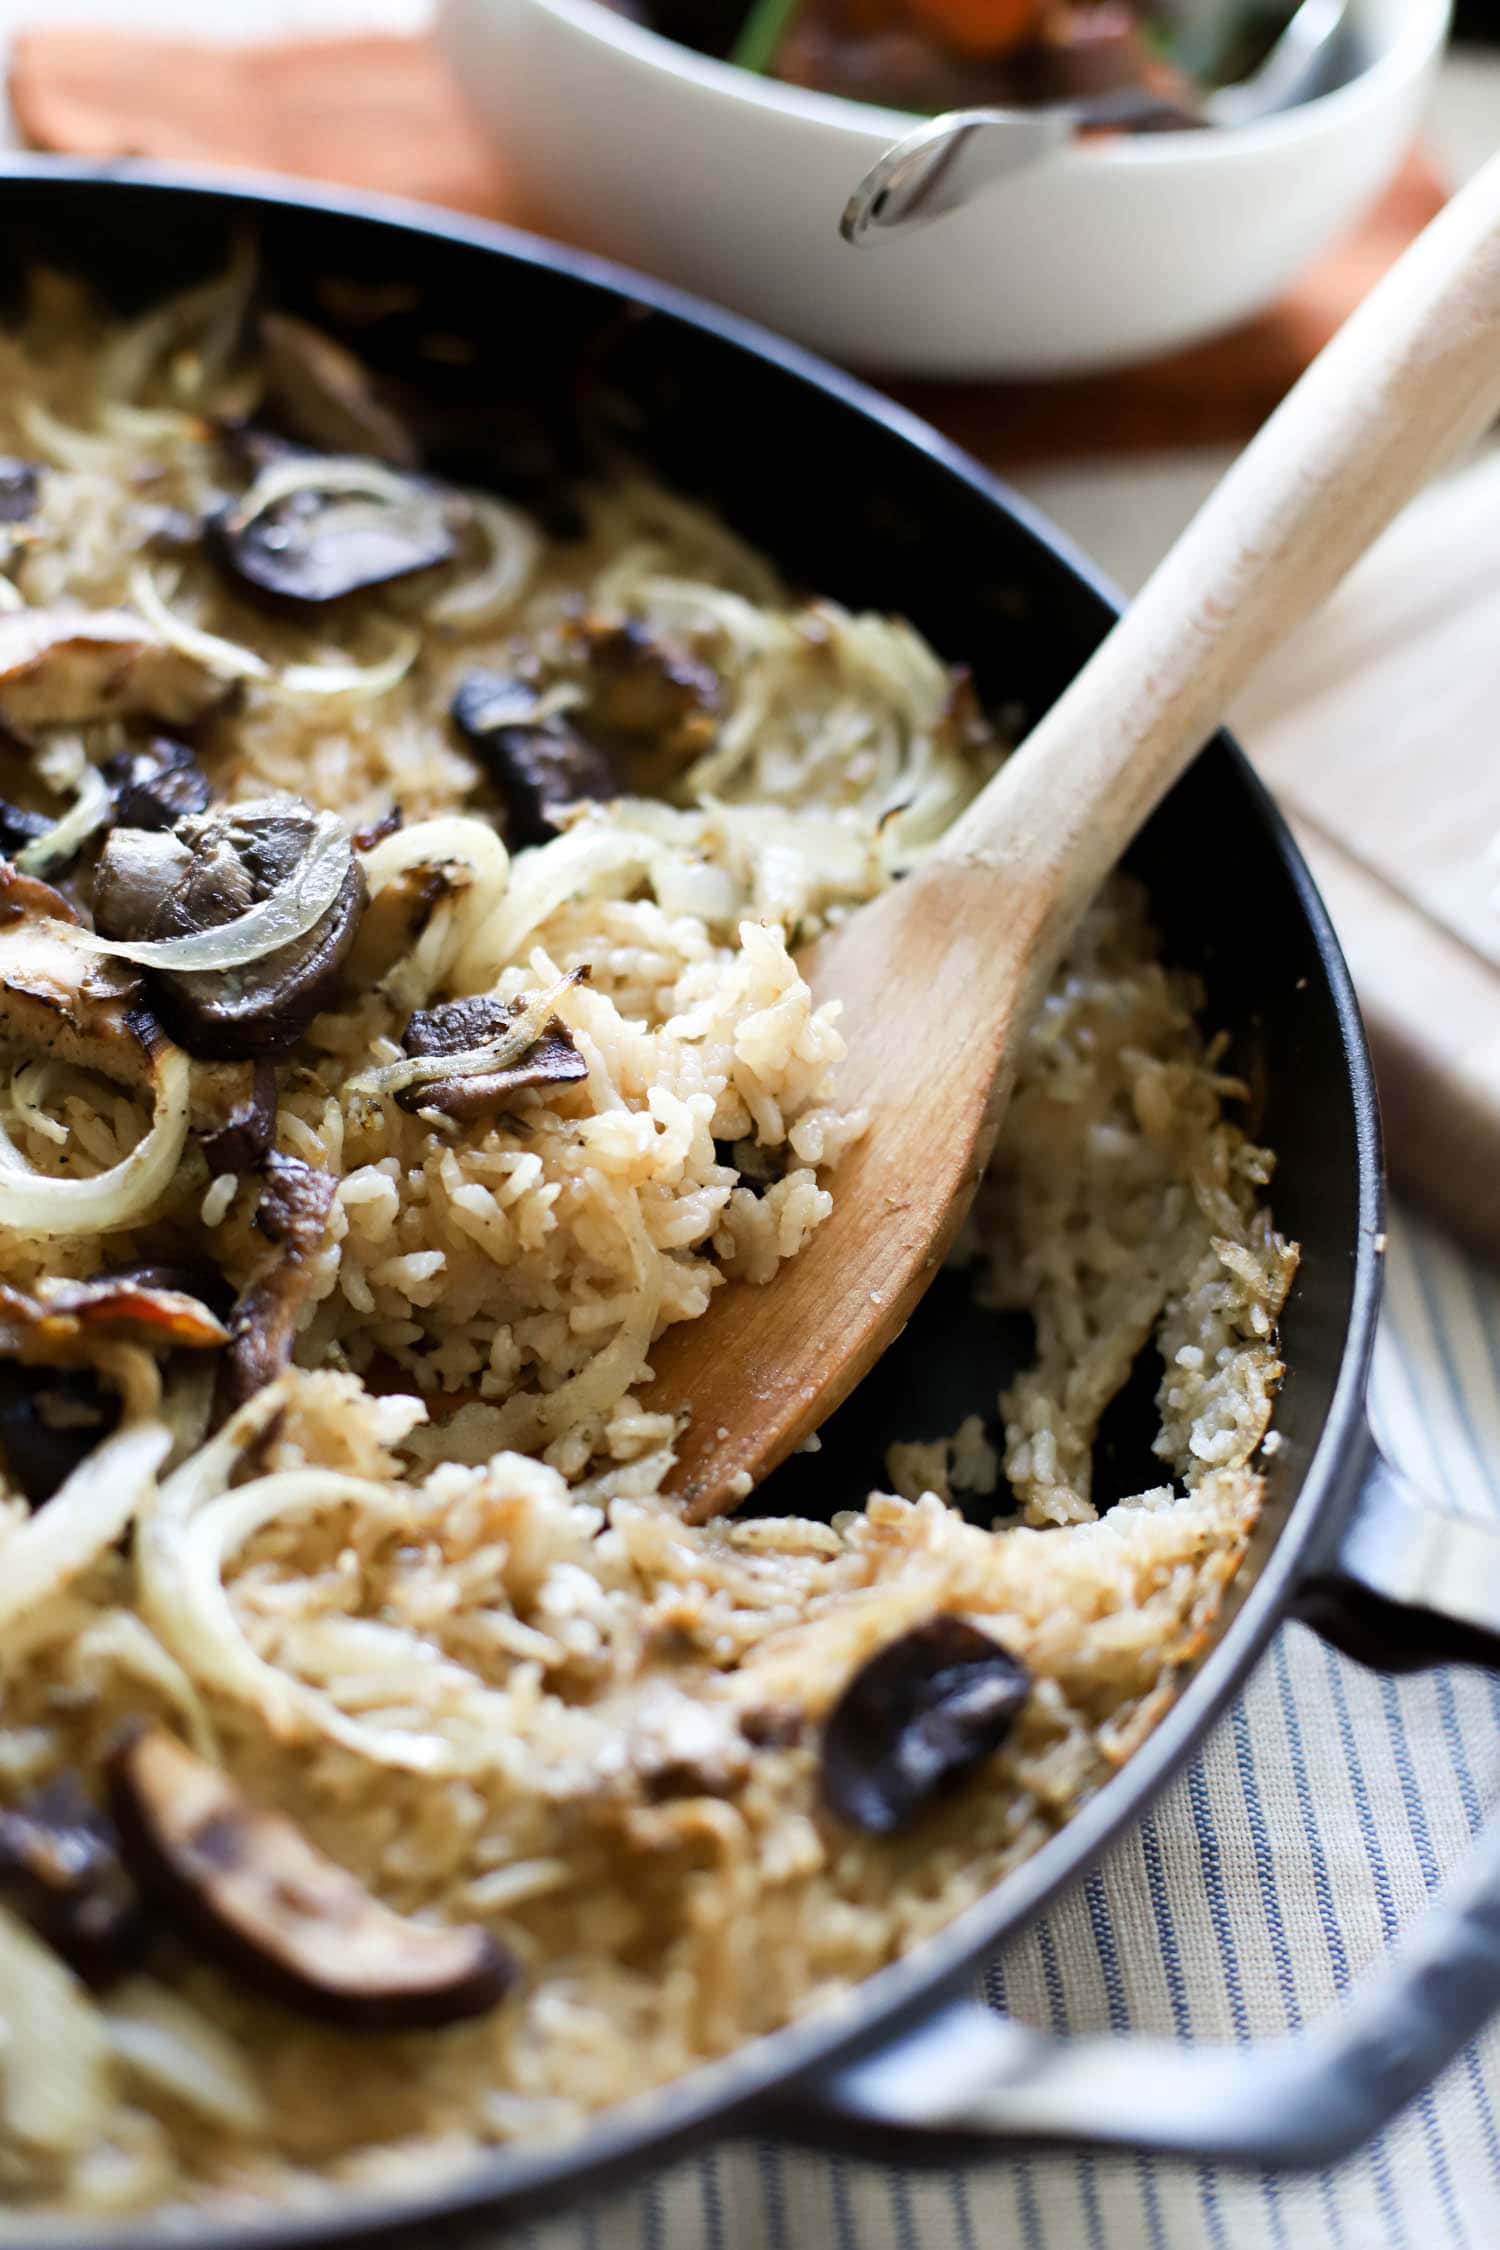 spoon in a pan of mushroom rice casserole.